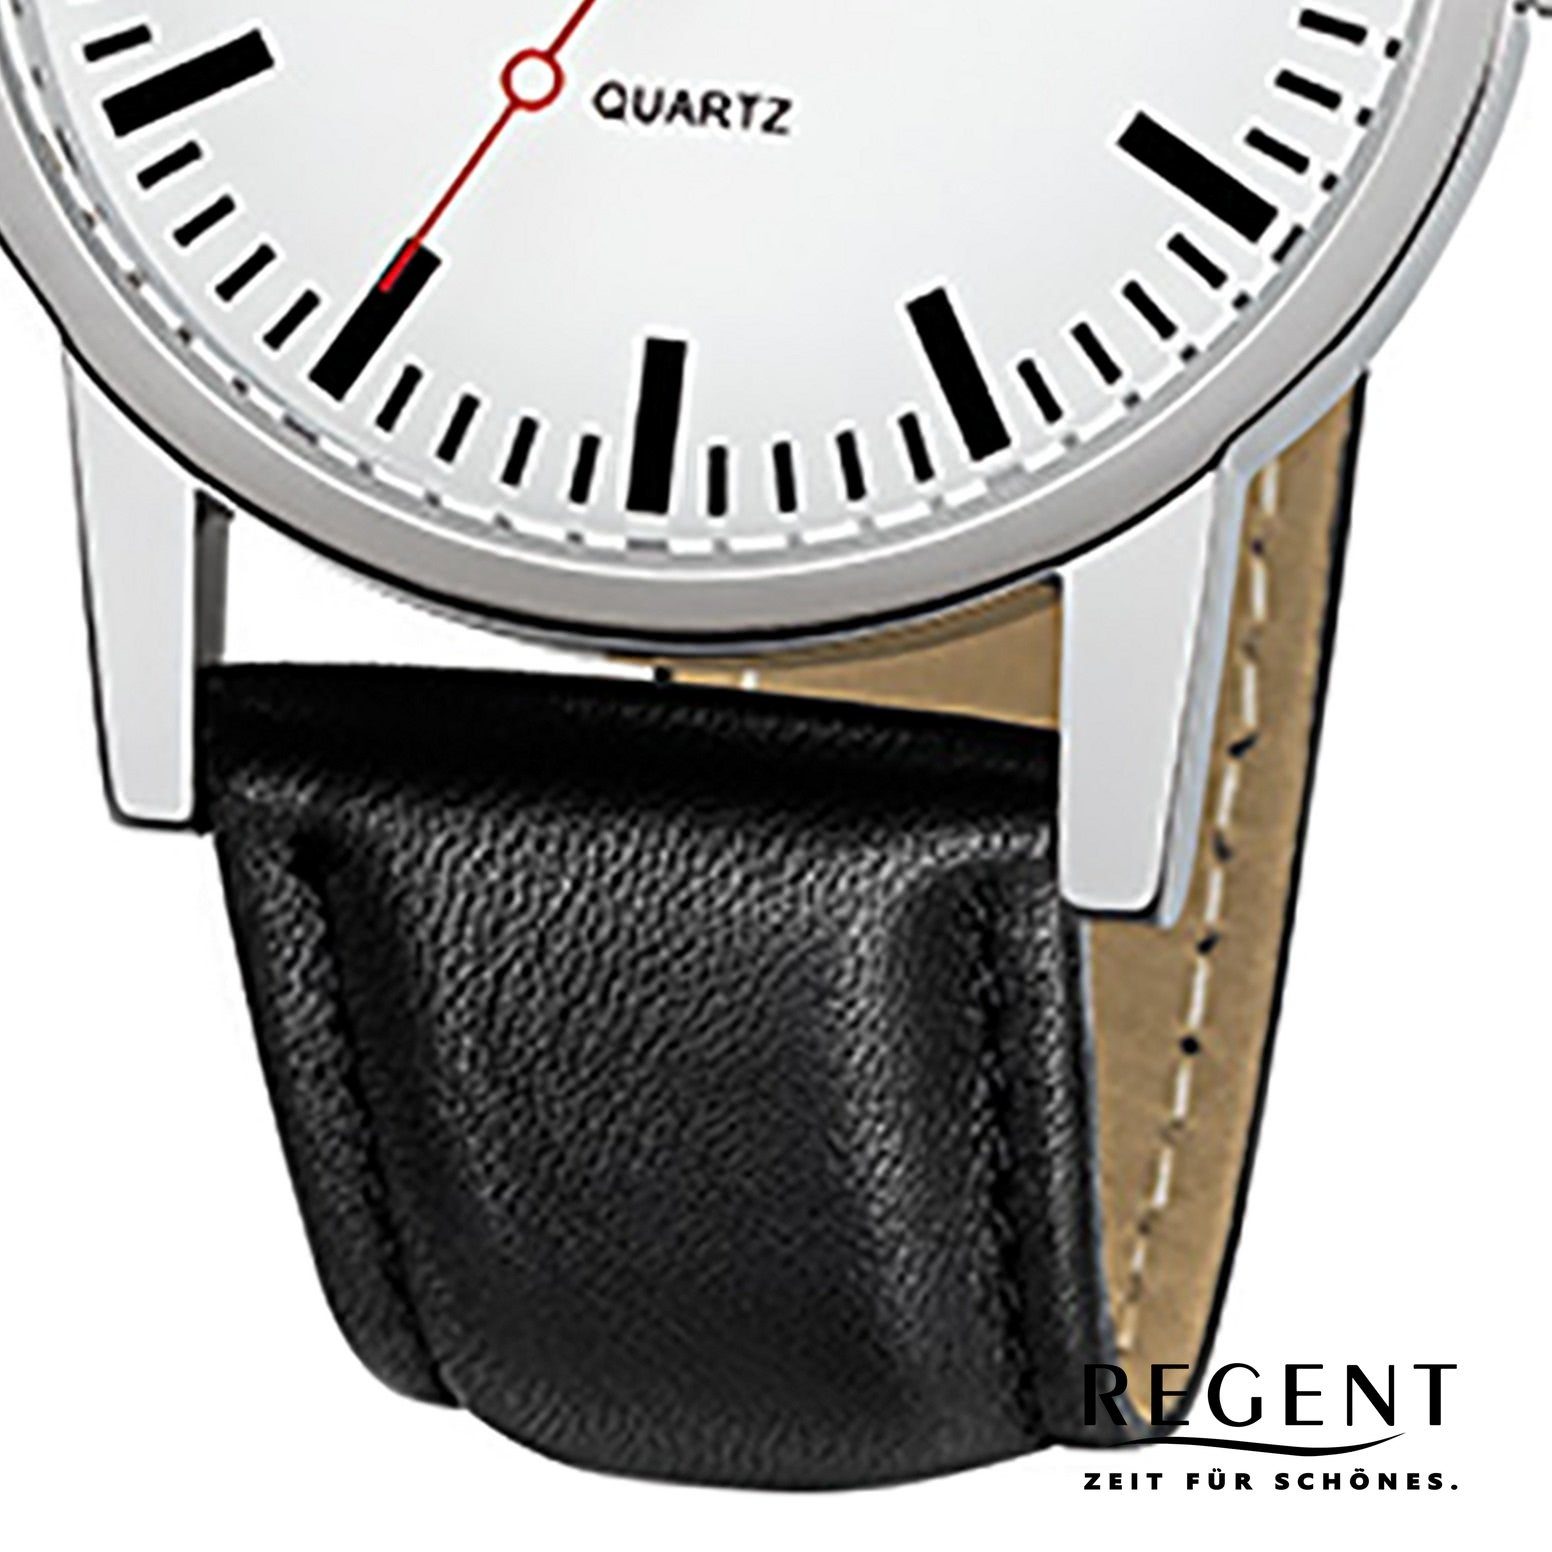 Regent Quarzuhr Armbanduhr 38mm), Herren rund, Regent schwarz (ca. Analog, Lederarmband mittel Herren-Armbanduhr